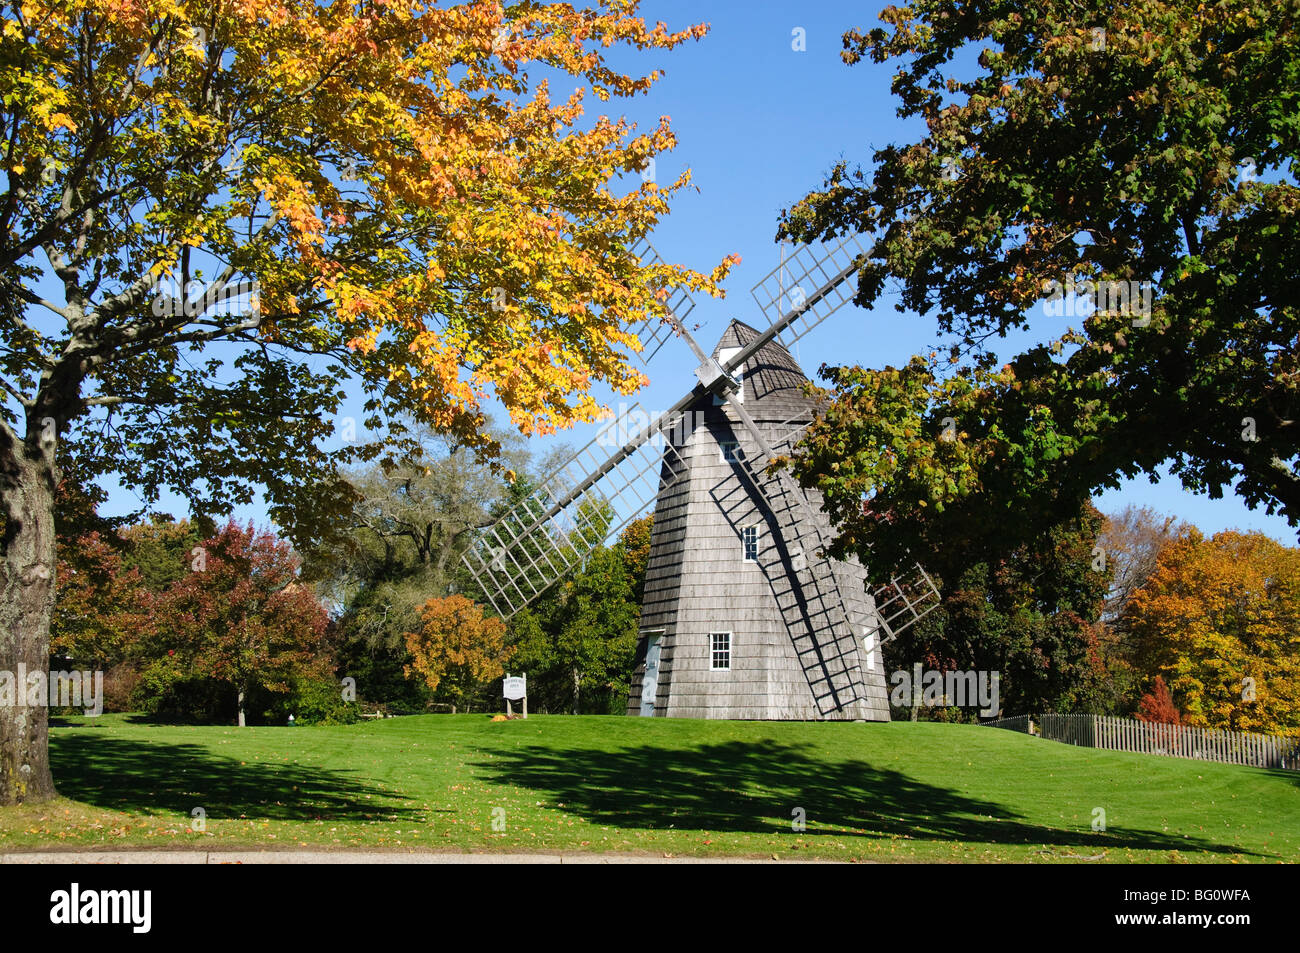 Old Hook Windmill, East Hampton, The Hamptons, Long Island, New York State, United States of America, North America Stock Photo